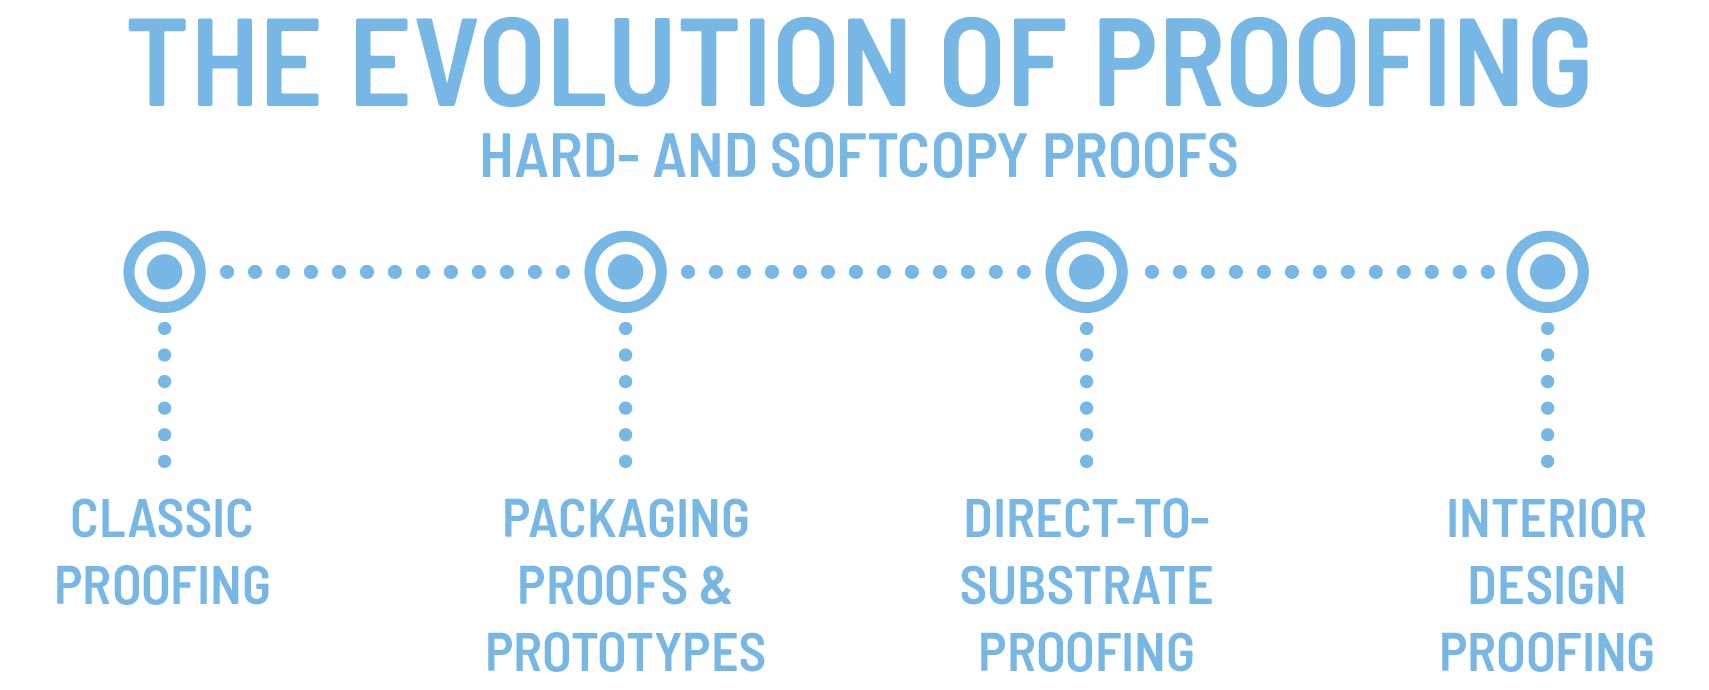 evolution of proofung